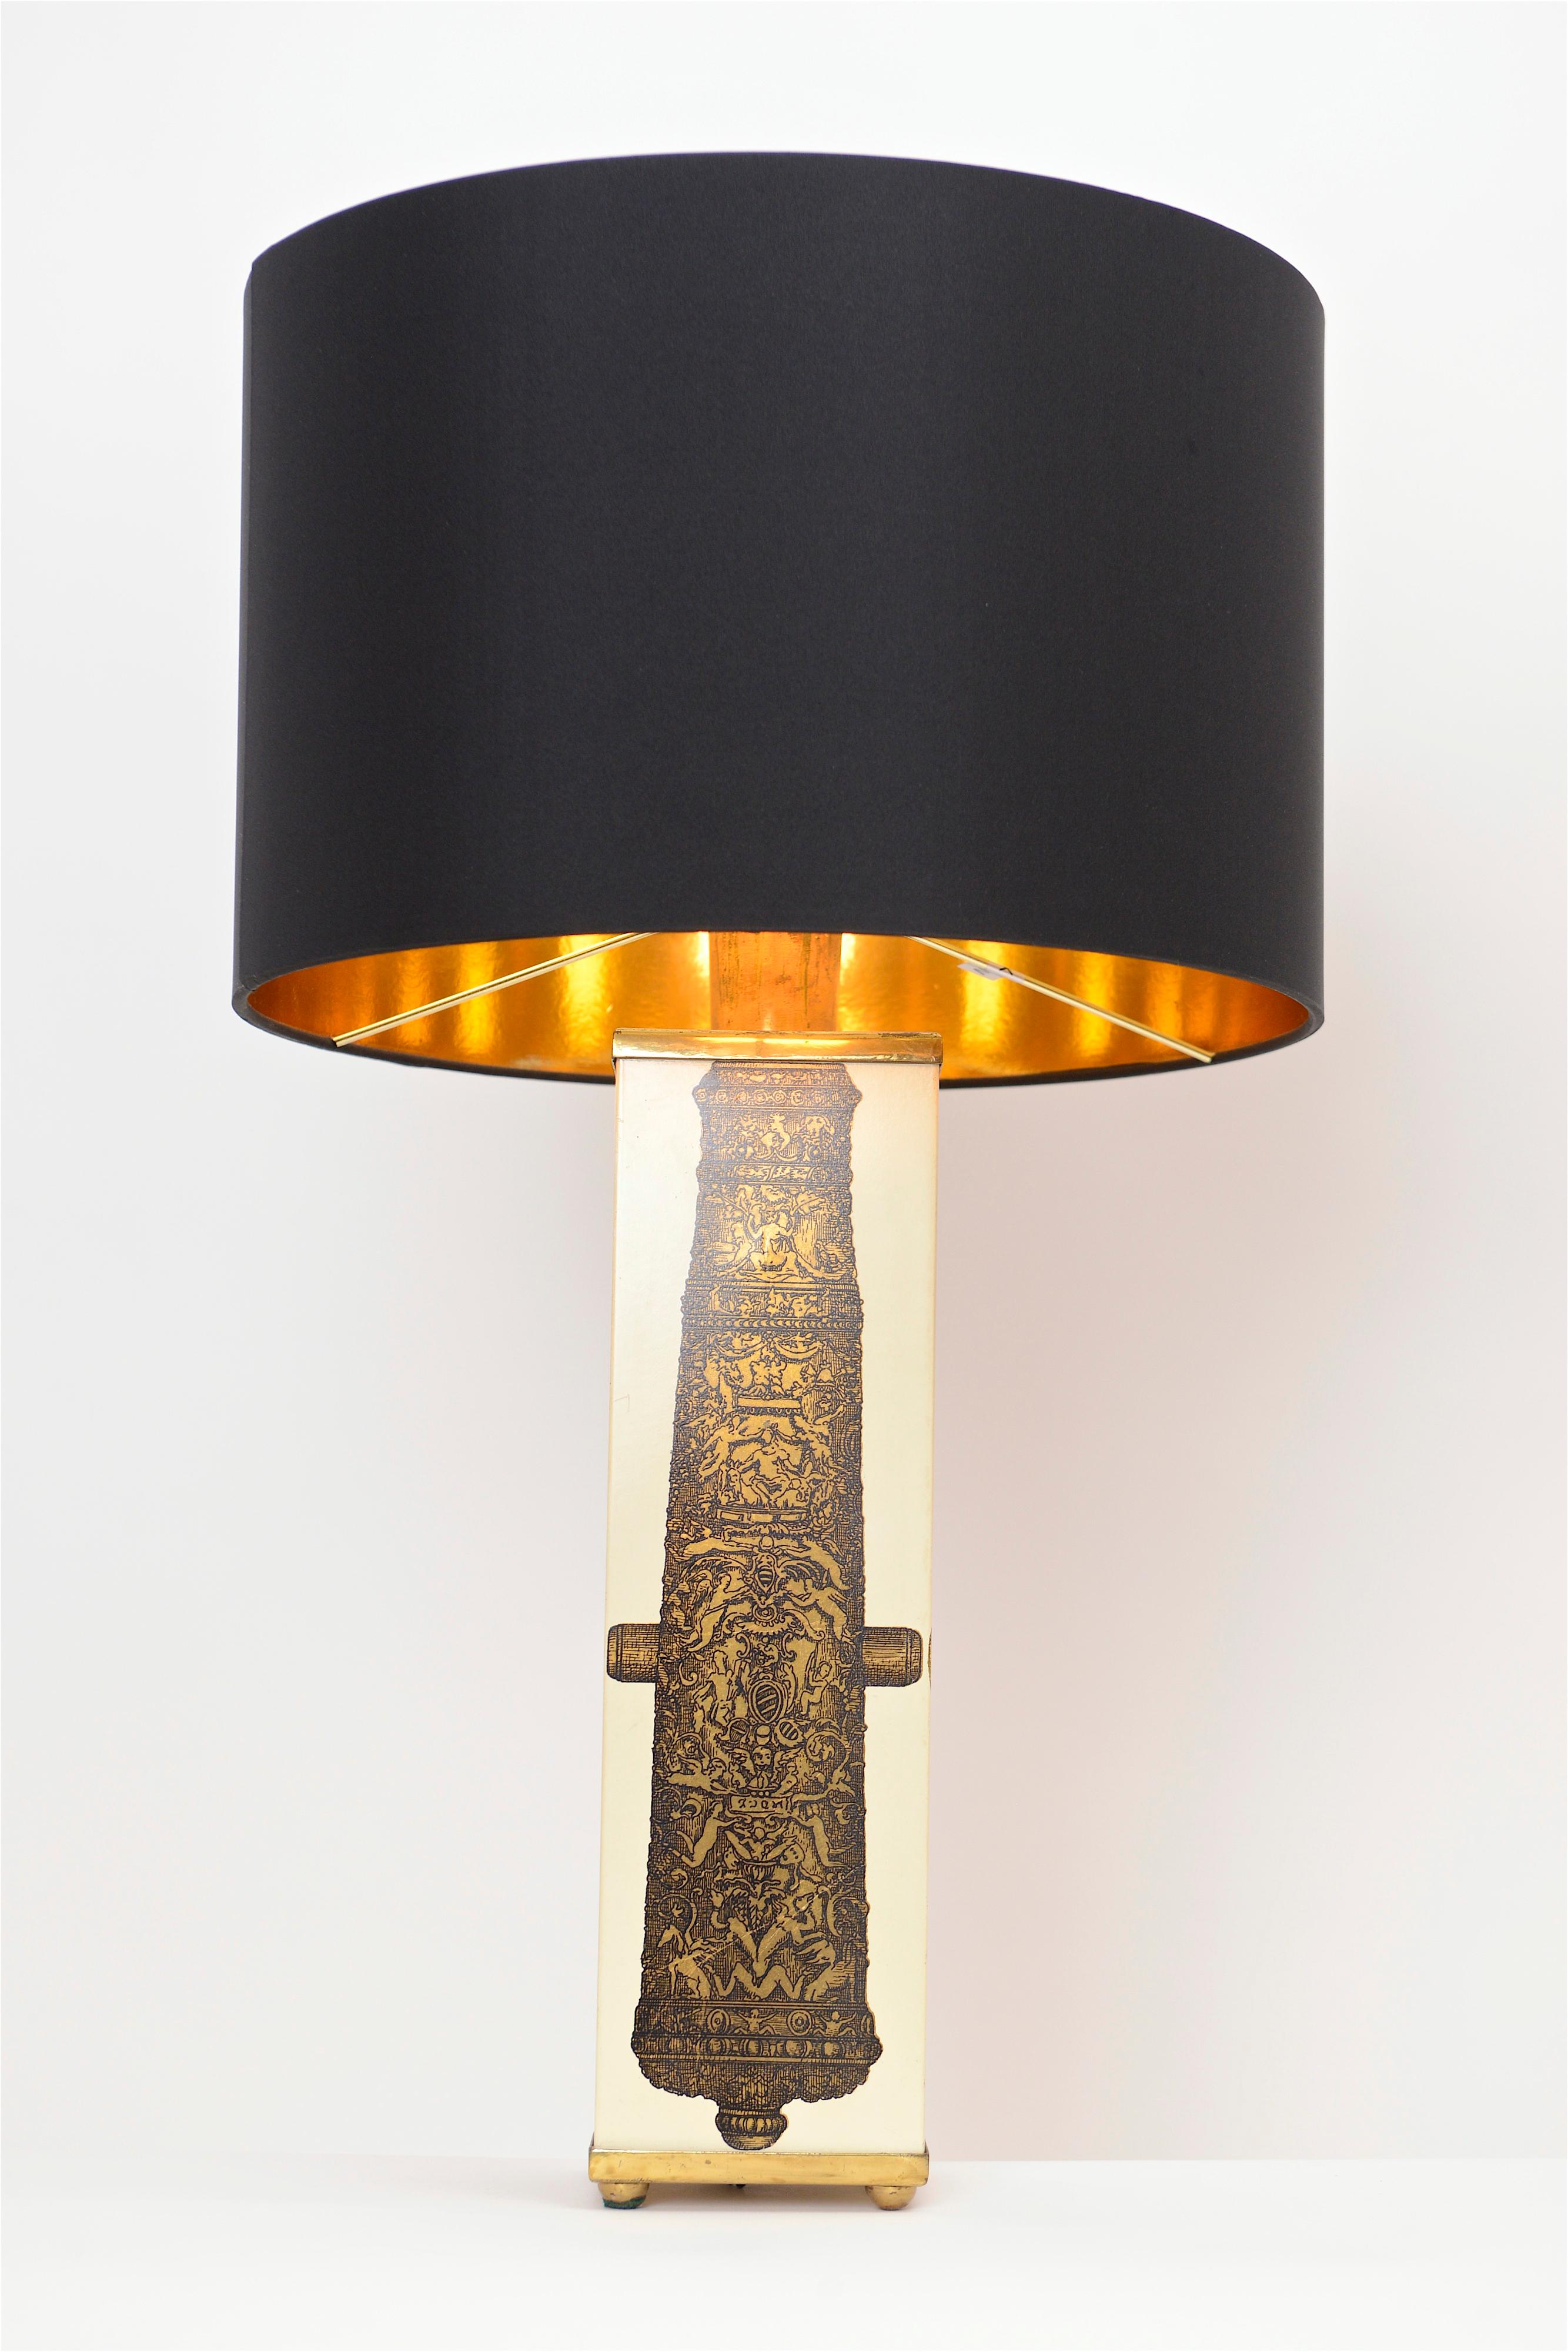 fornasetti table lamp